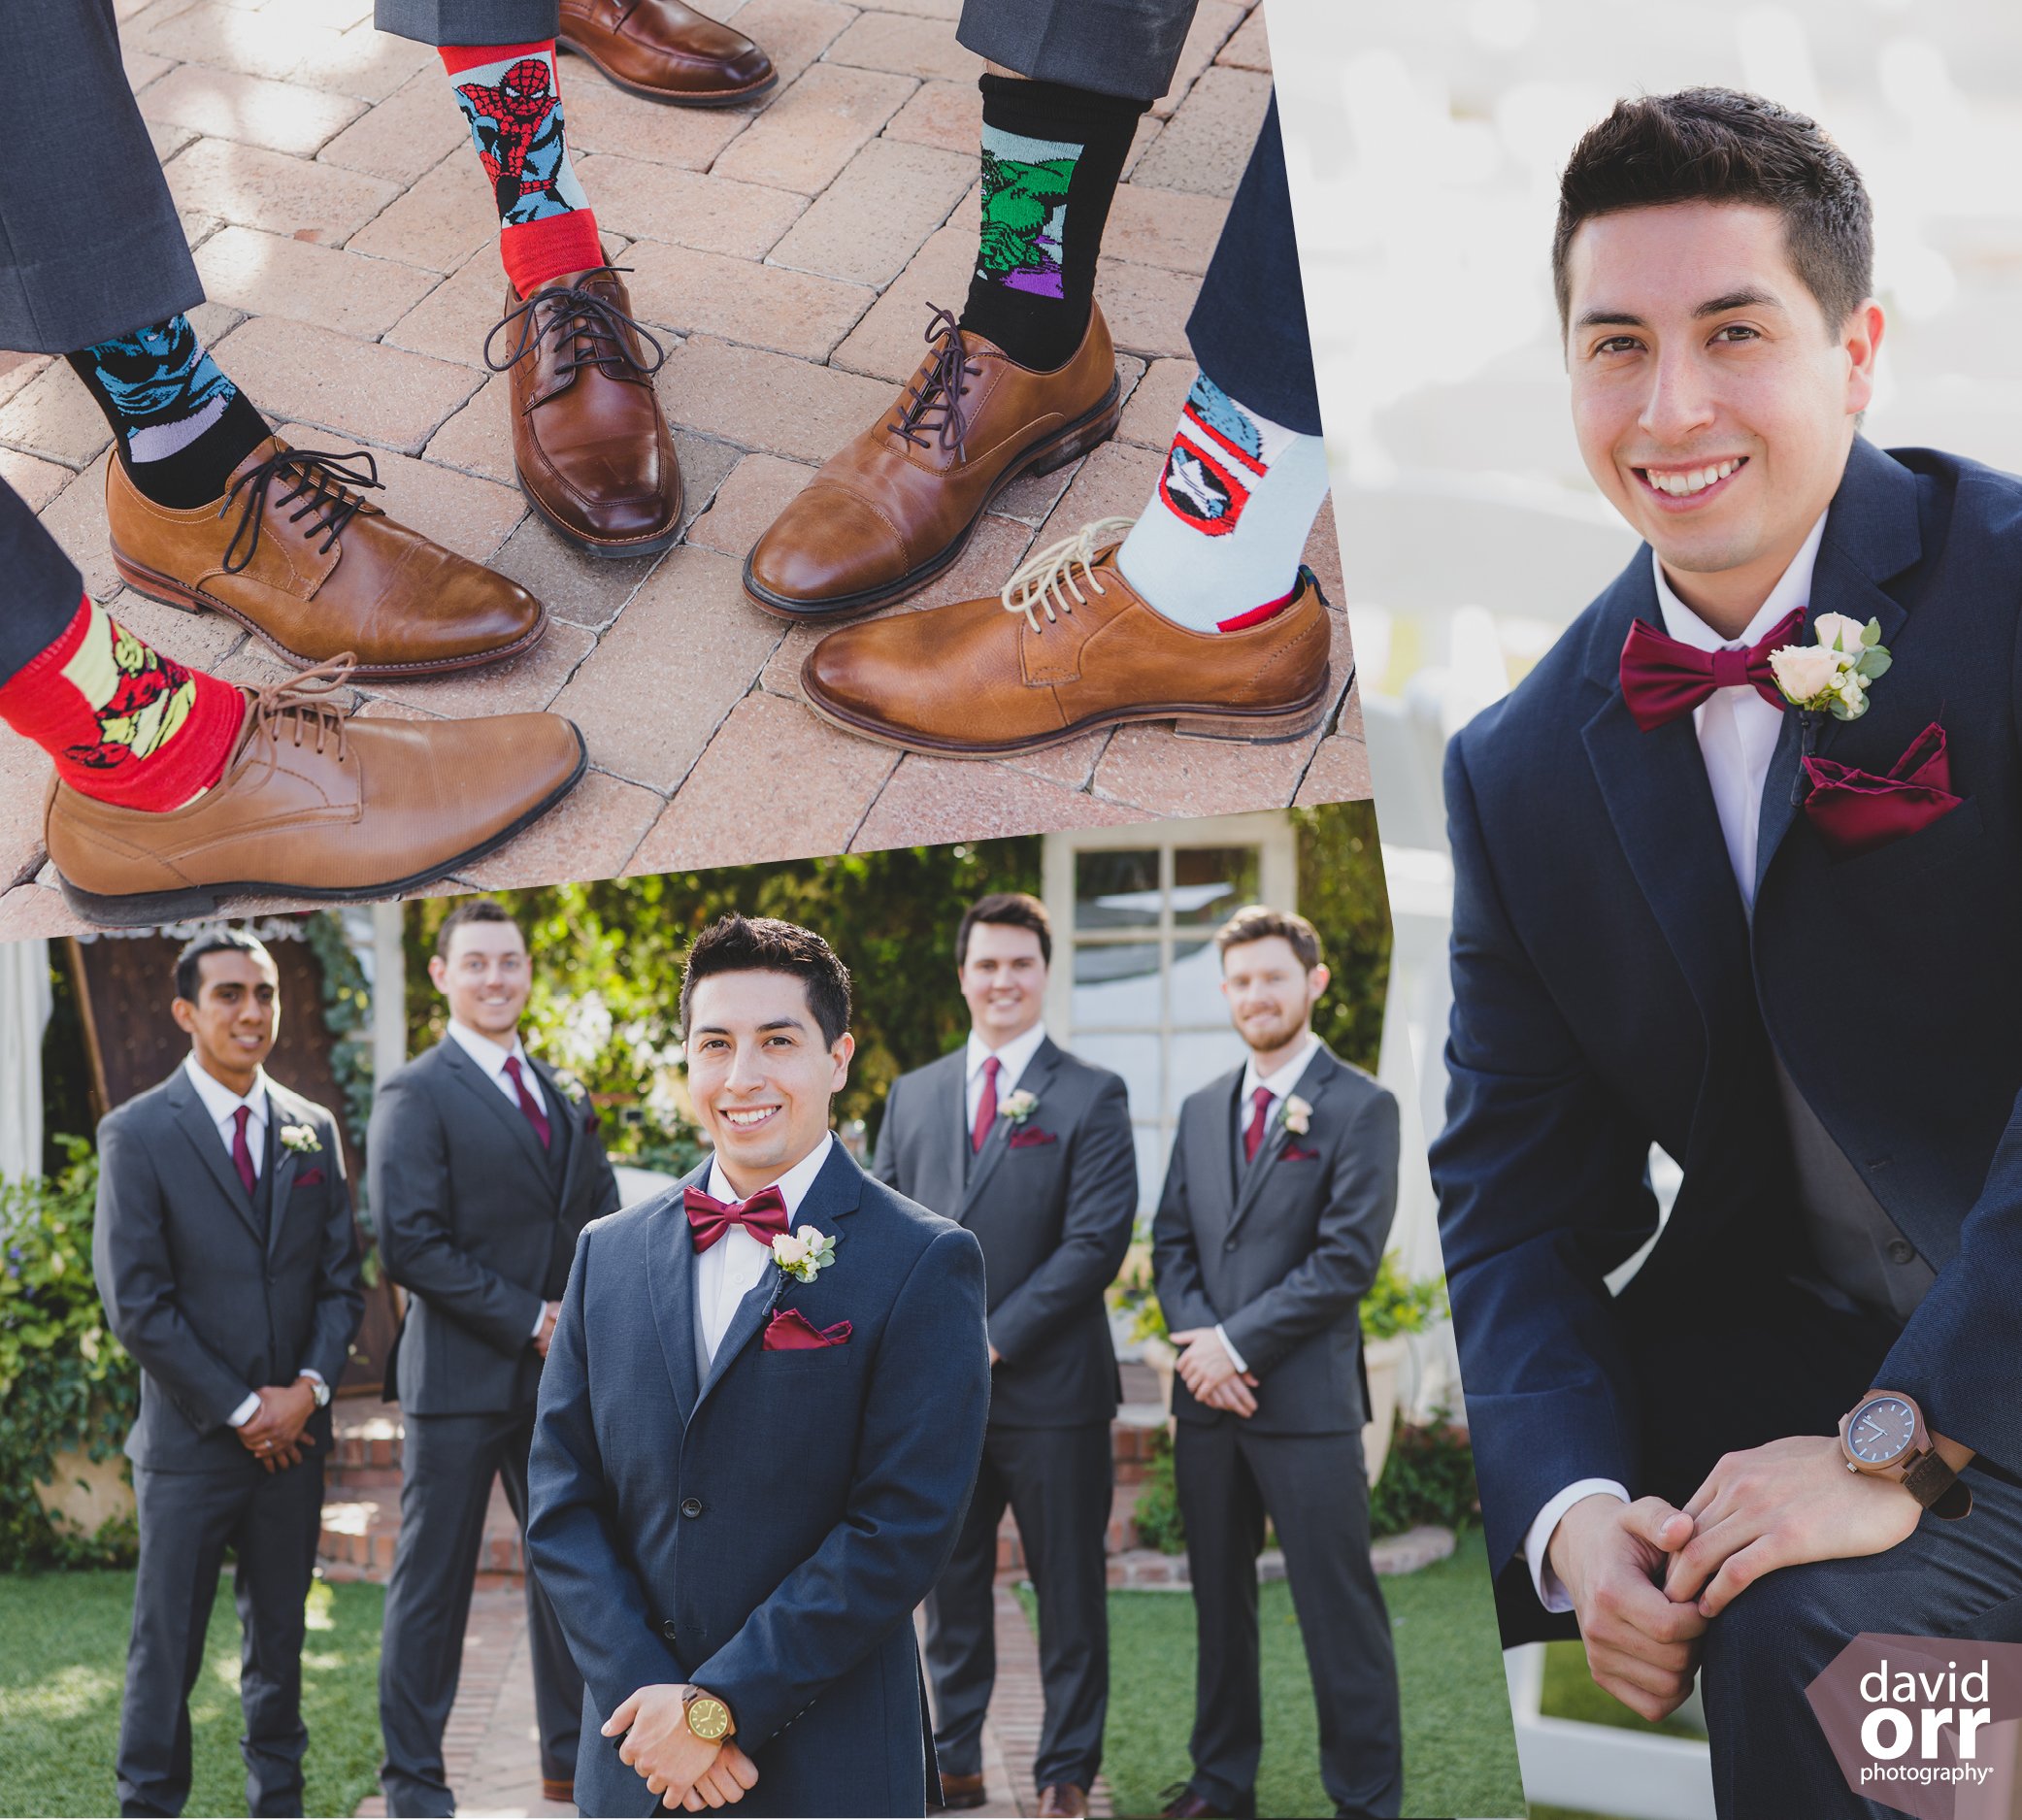 Dapper groom style plus super hero socks